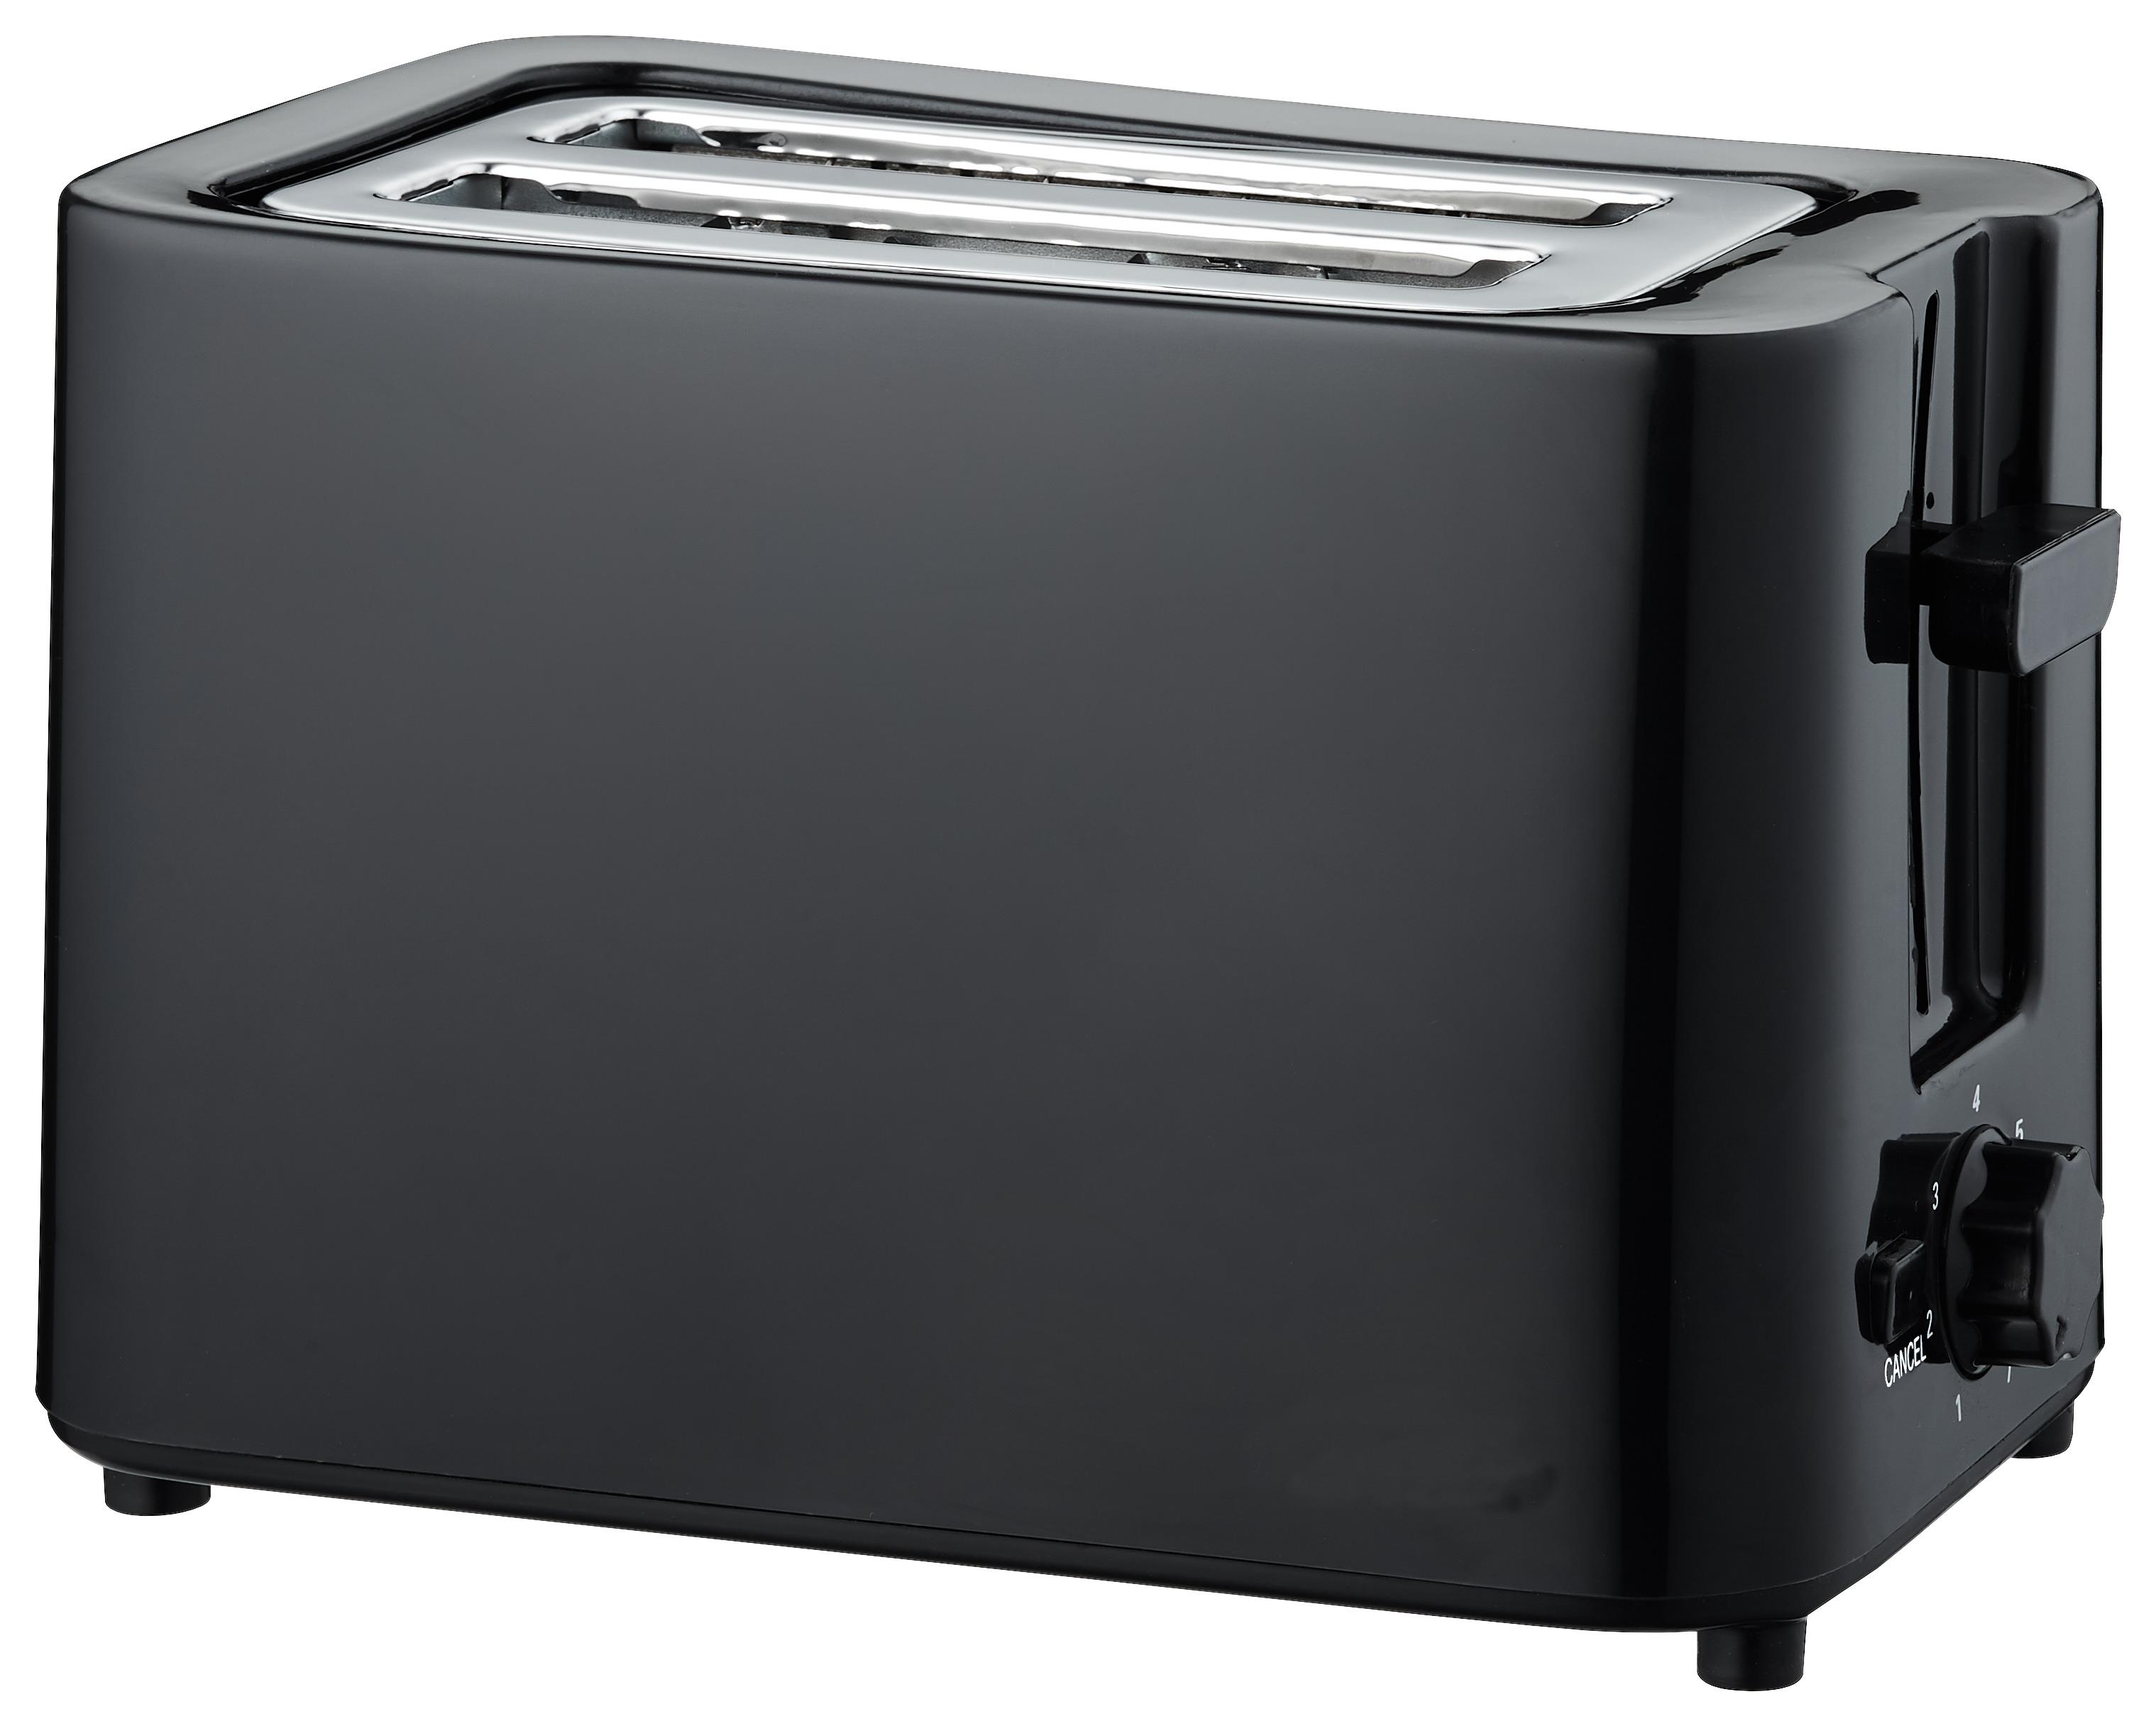 Toaster Role max. 700 Watt - Edelstahlfarben/Schwarz, MODERN, Kunststoff/Metall (23,2/14,2/15,8cm) - Insido